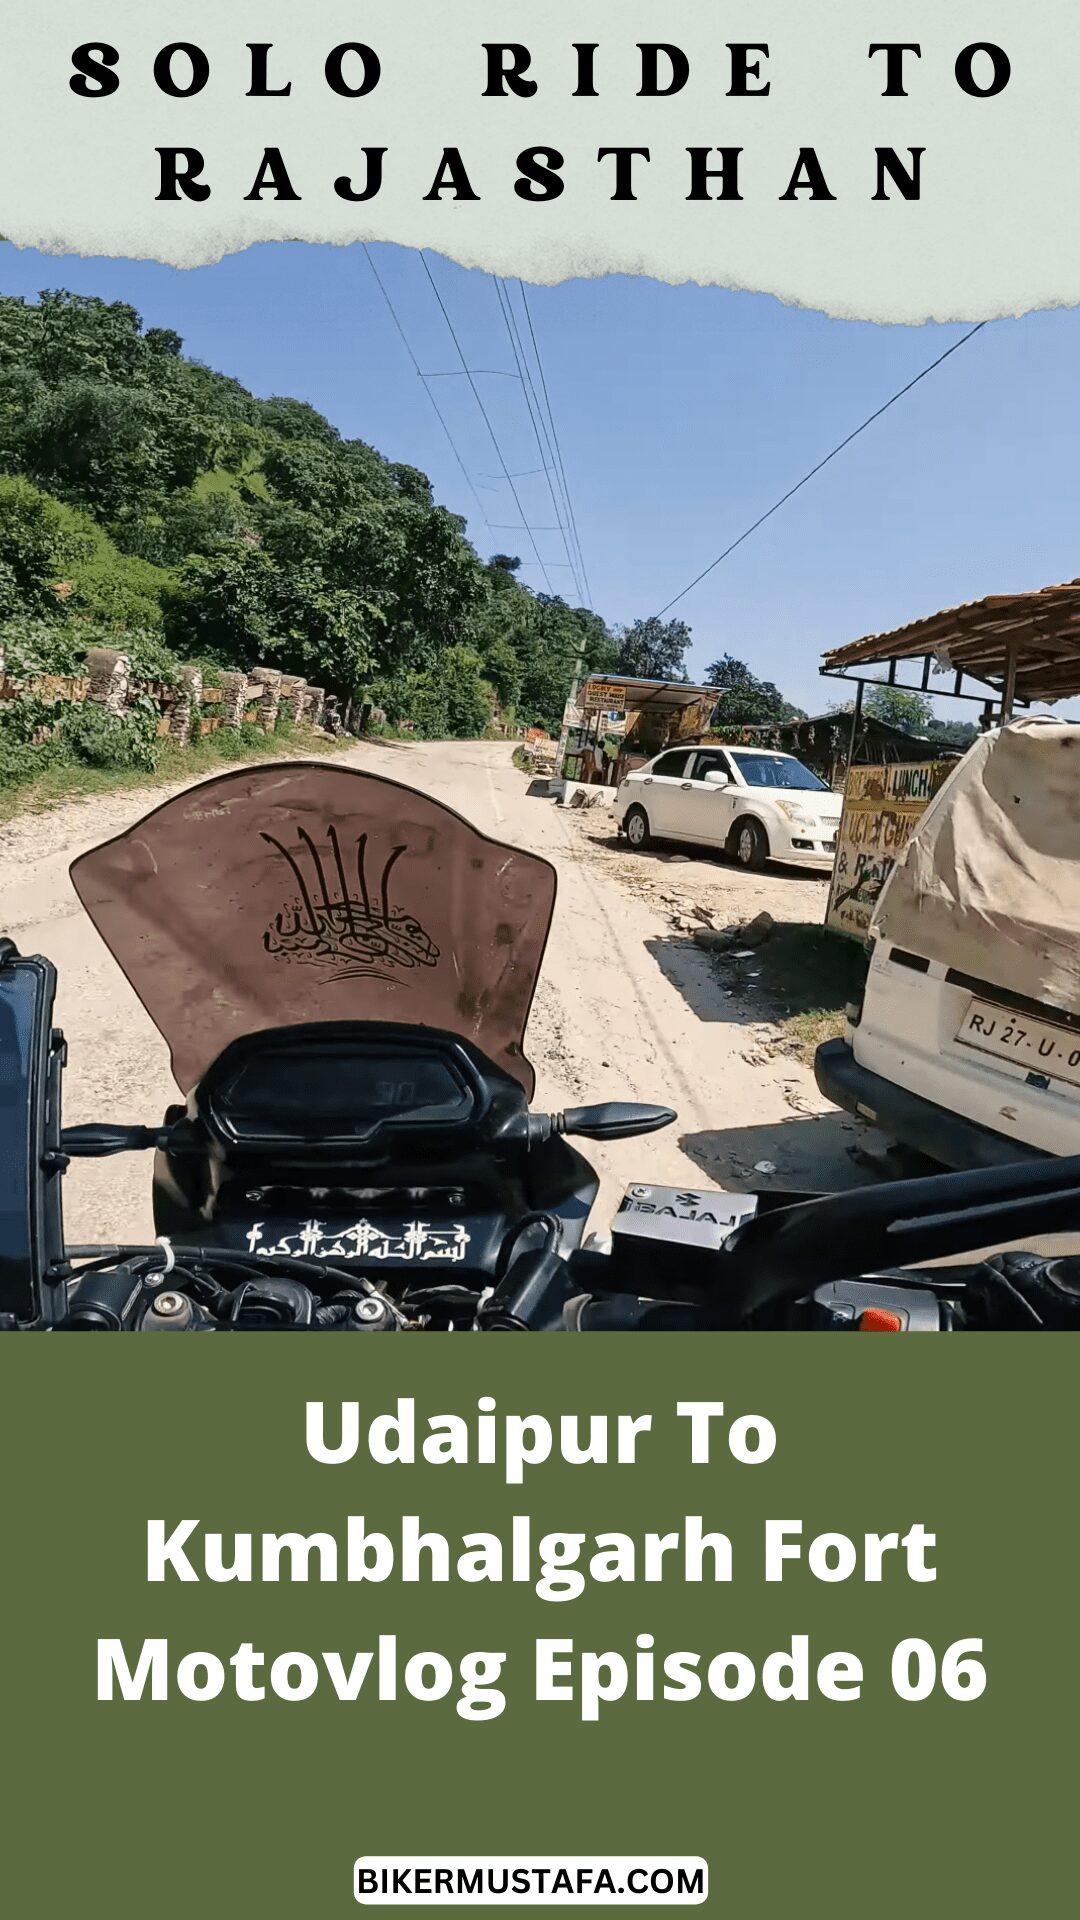 Rajasthan Ride Udaipur To Kumbhalgarh Fort Motovlog Episode 06